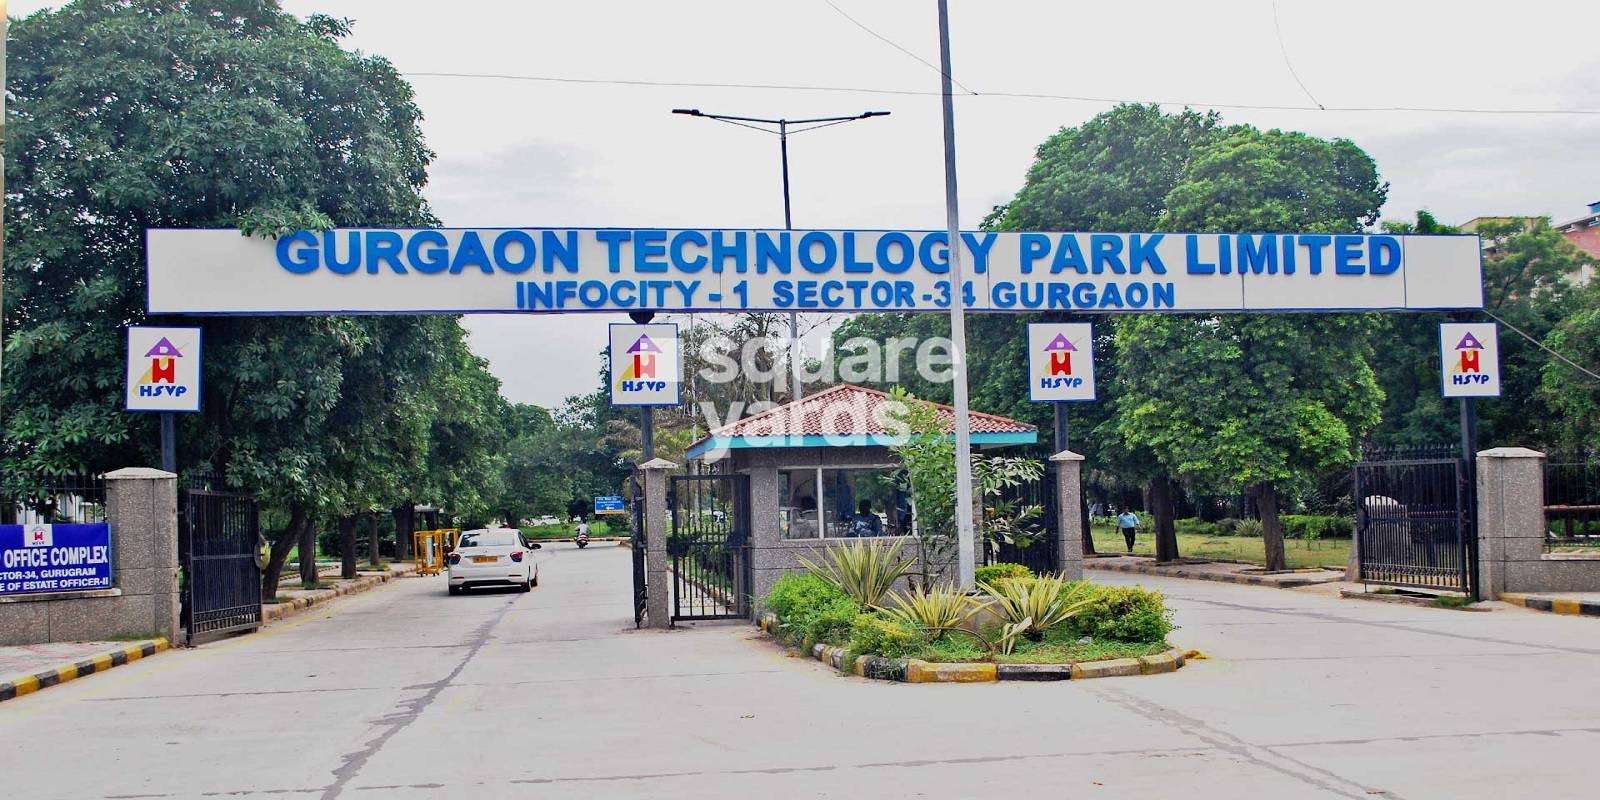 Gurgaon Technology Park Cover Image